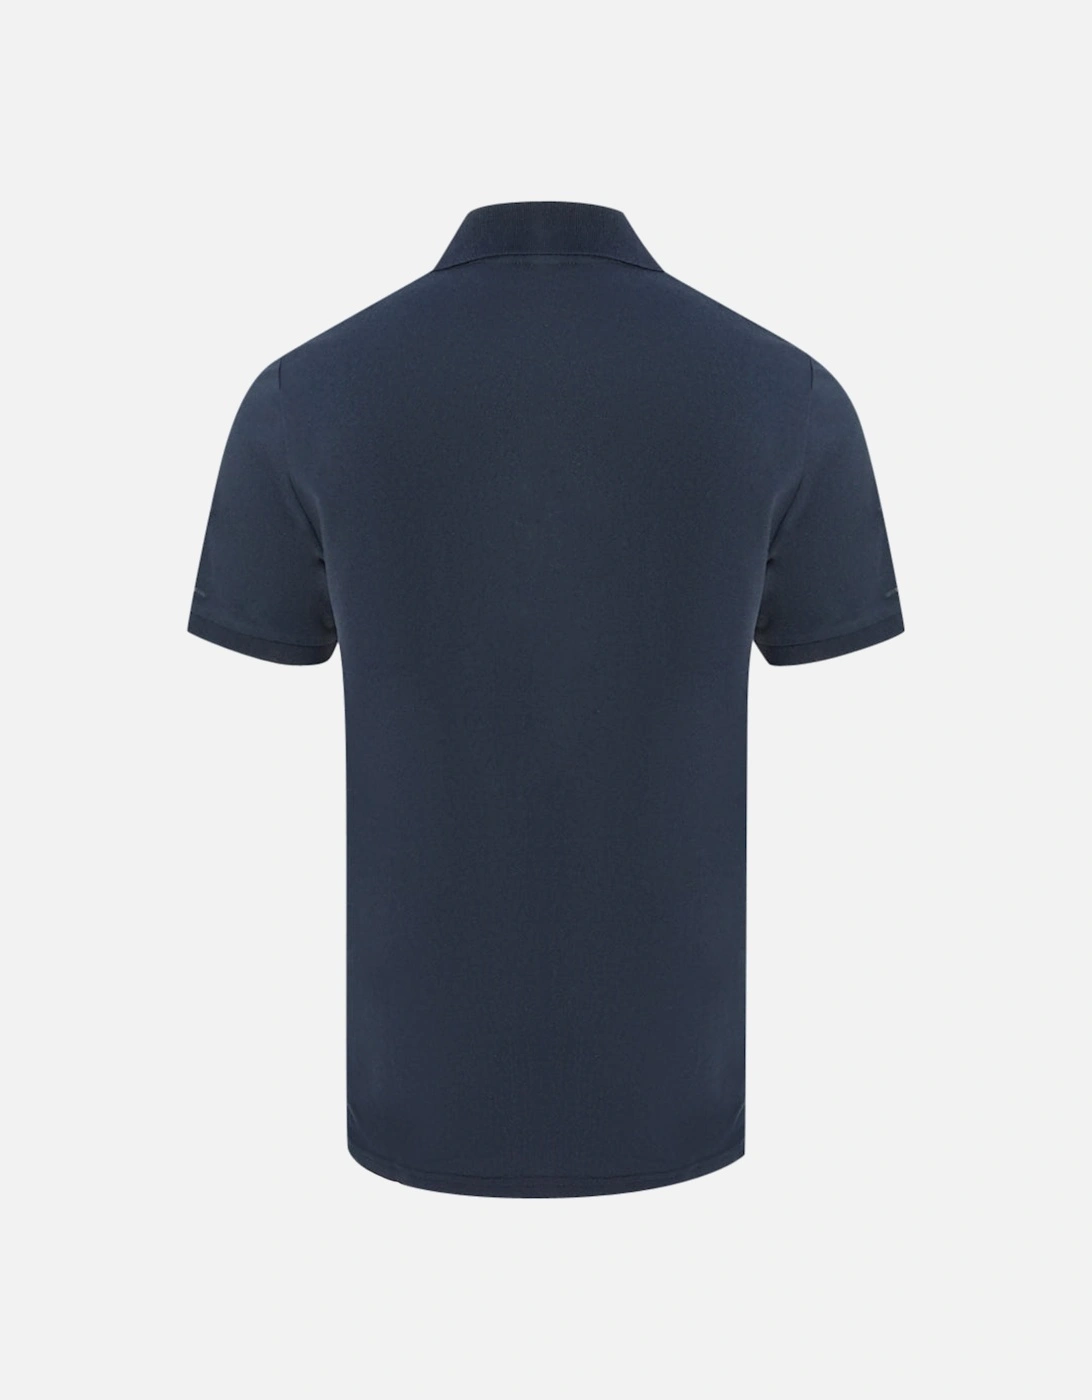 Raw Mazarine Blue Polo Shirt